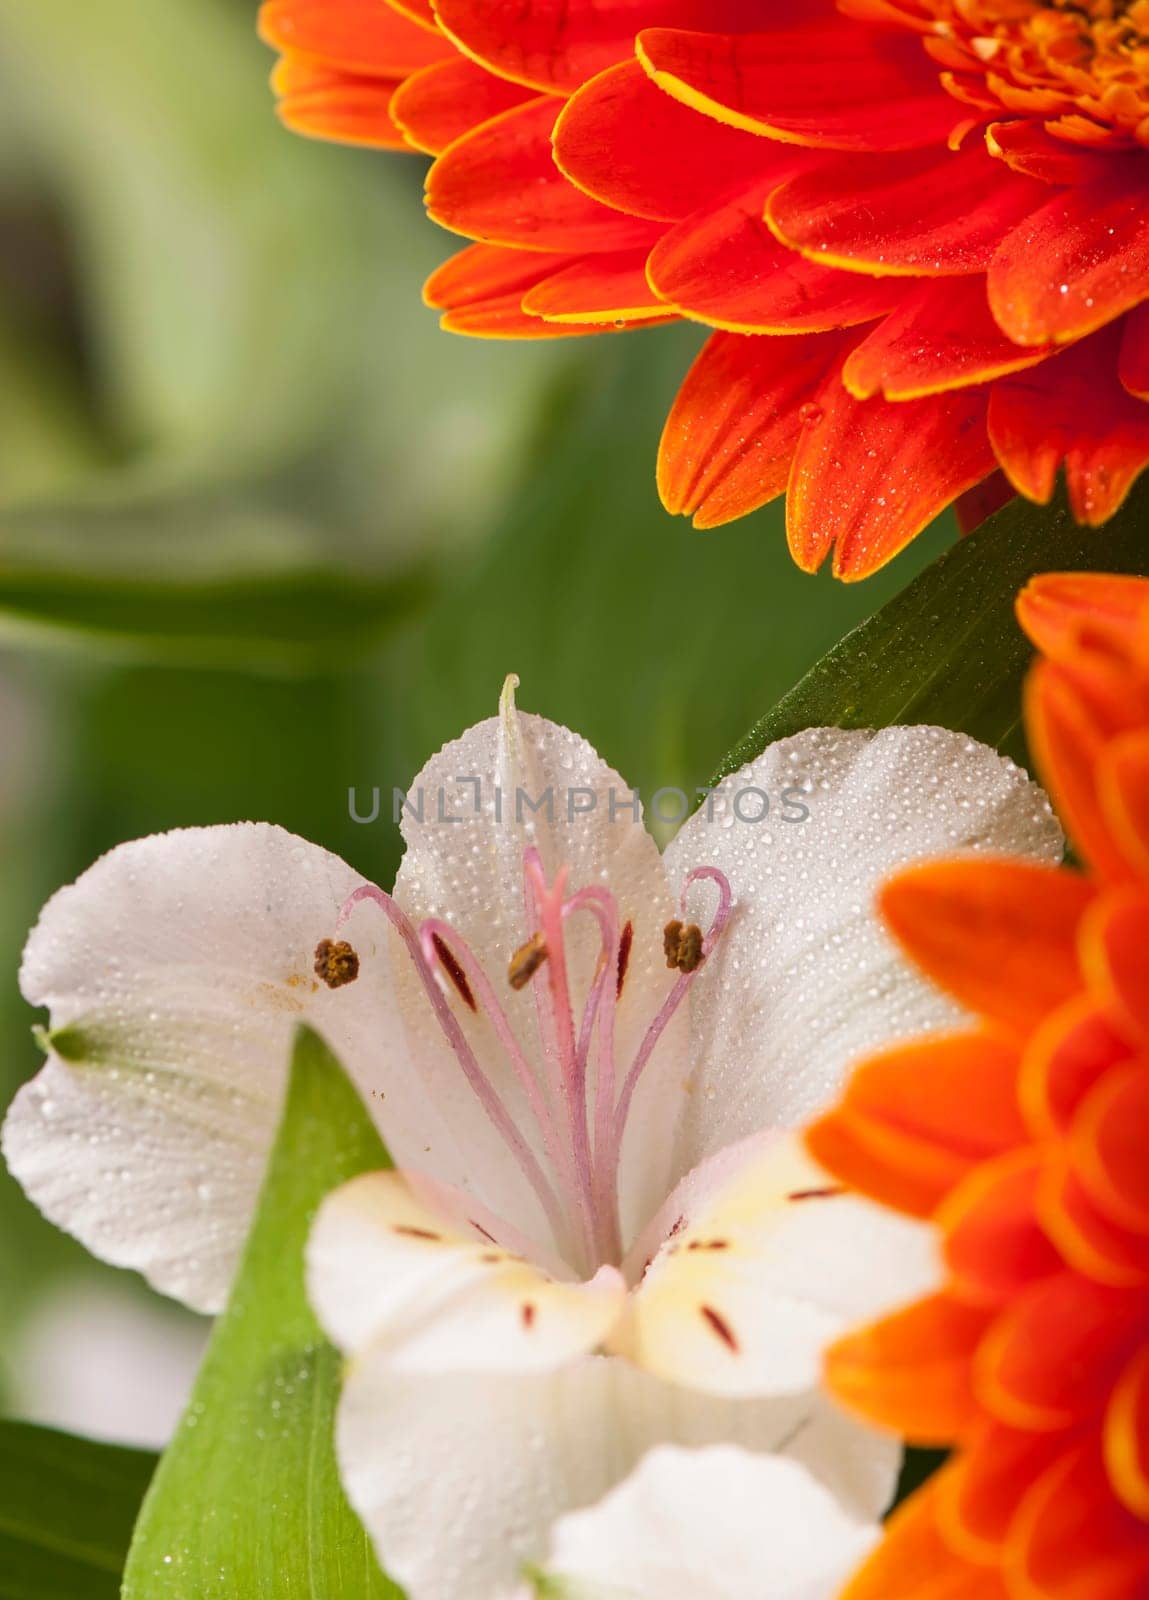 Orange gerbera flower against green blurred background